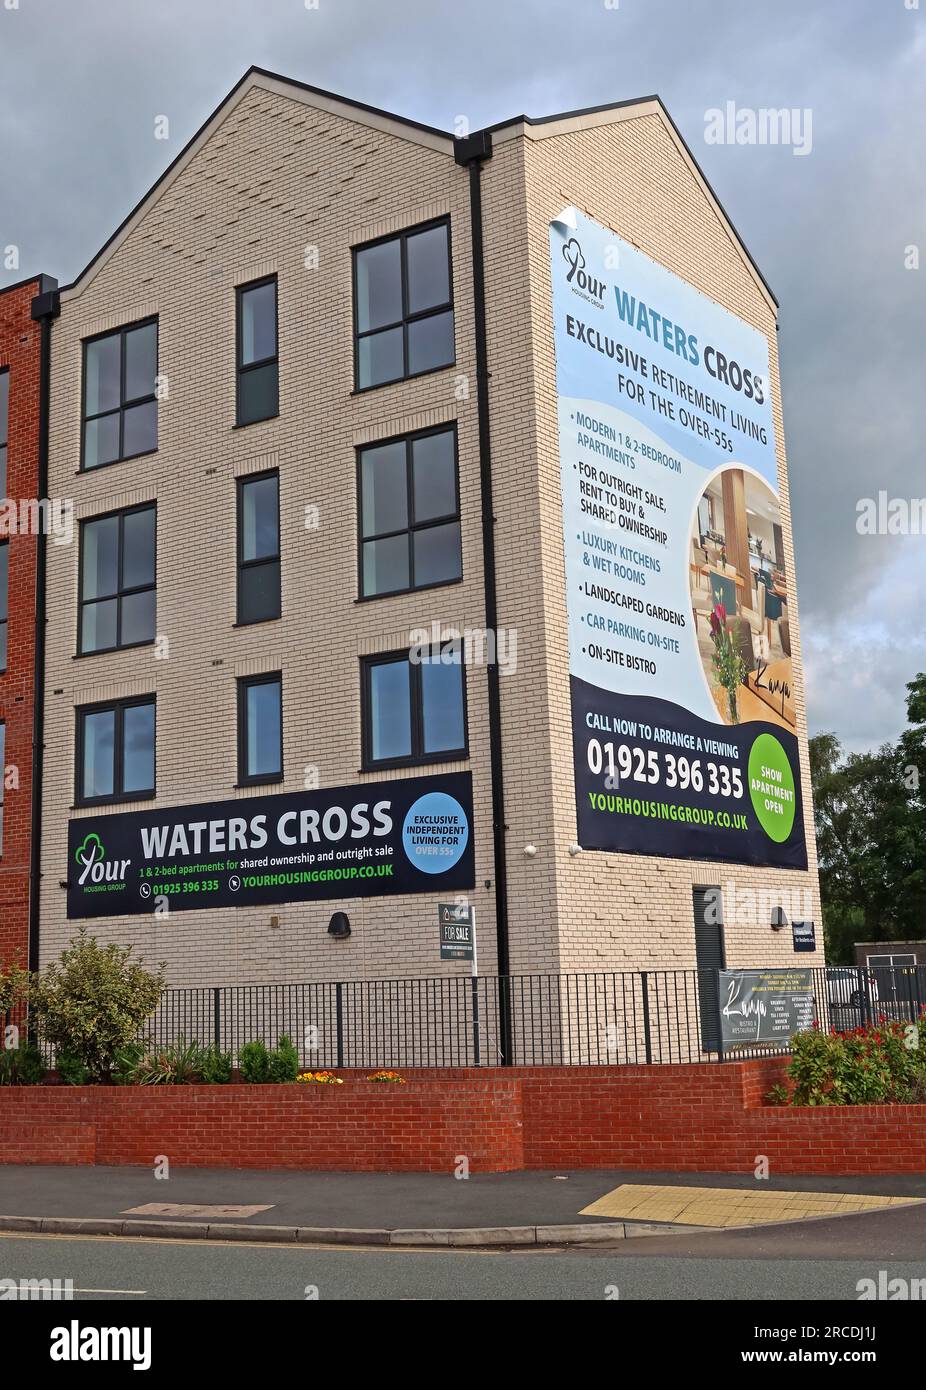 Ihre Wohnungsgruppe, Waters Cross Shared Ownership Retirement Living Development, Watling Street, Northwich, Cheshire, England, UK, CW9 5EX Stockfoto